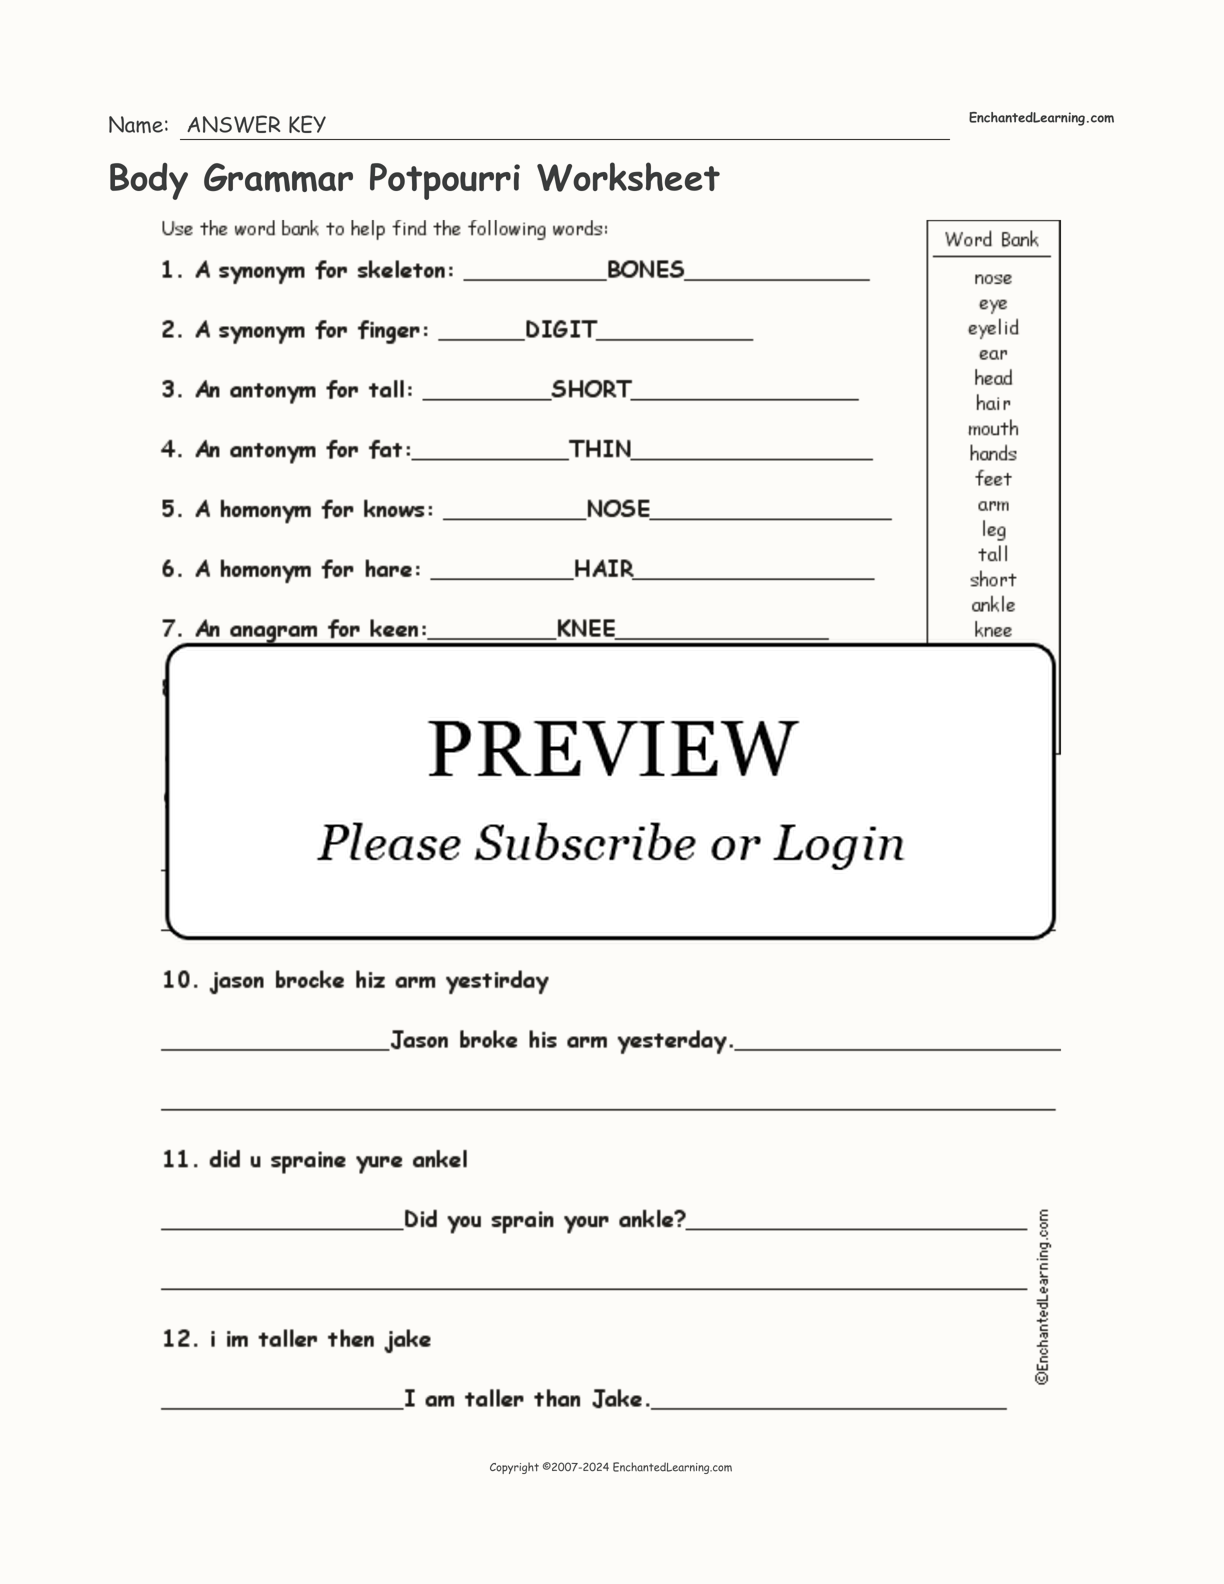 Body Grammar Potpourri Worksheet interactive worksheet page 2